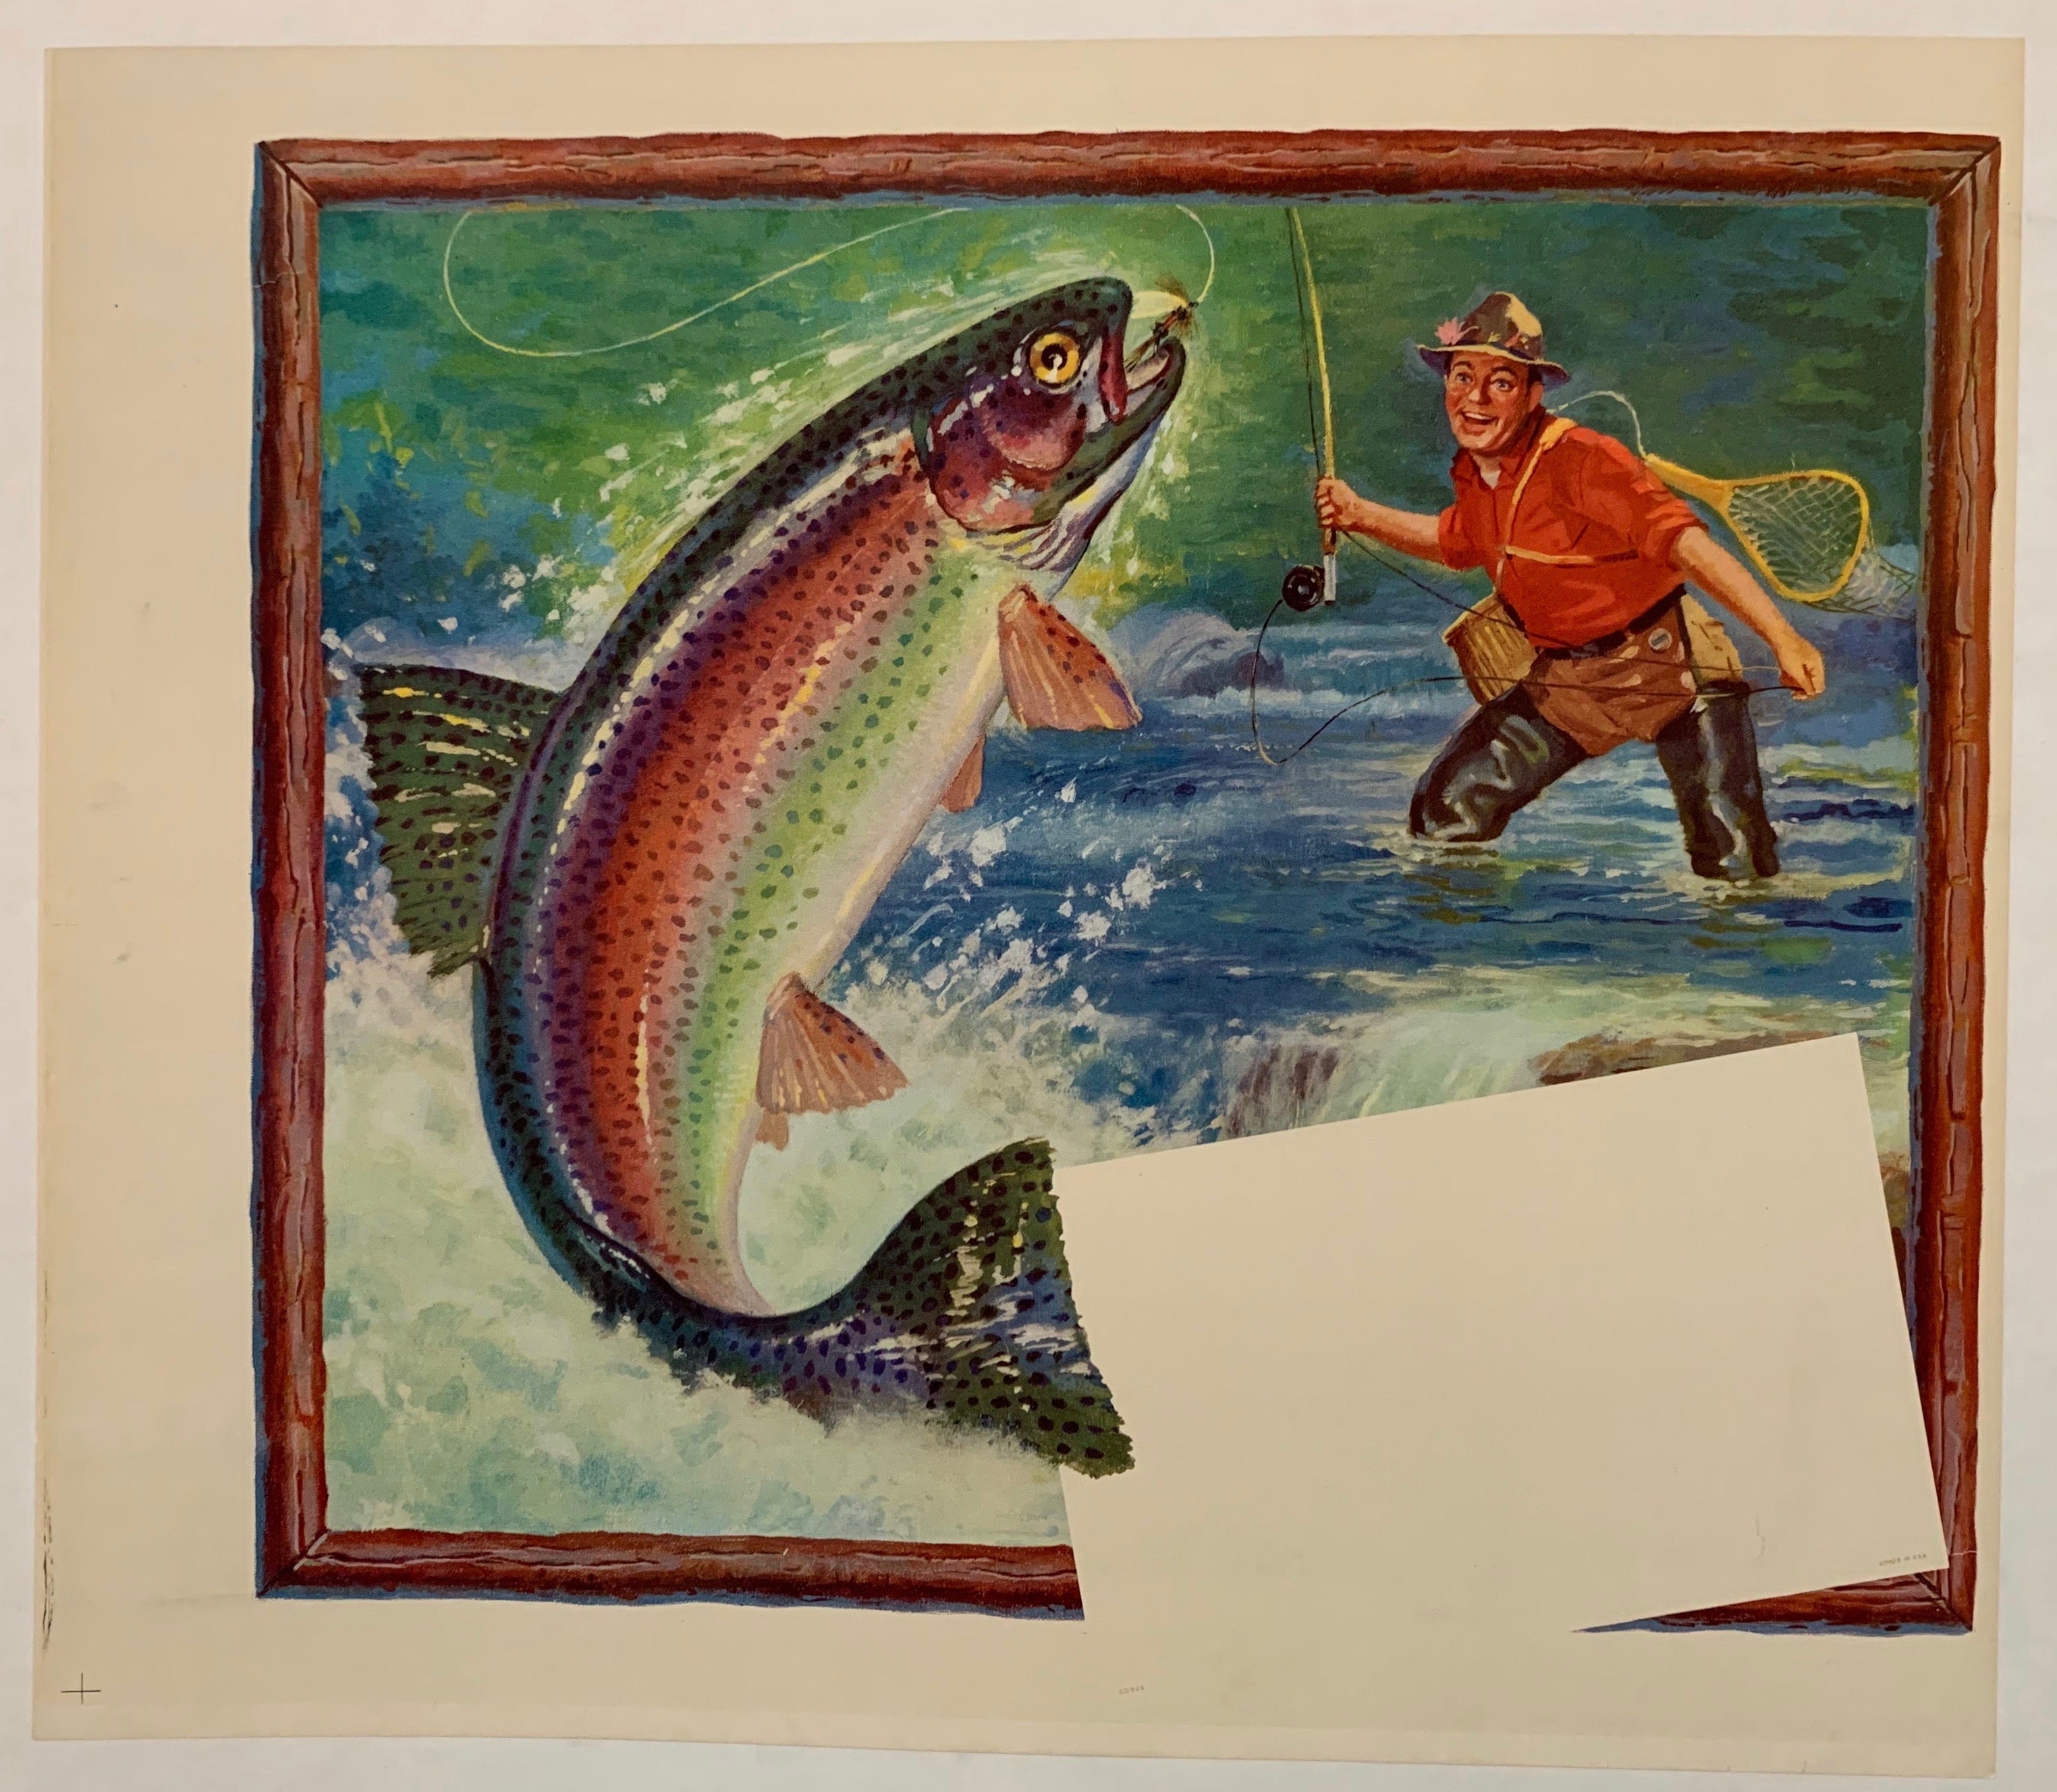 CafePress - Vintage Trout Fishing Illustration - Printed